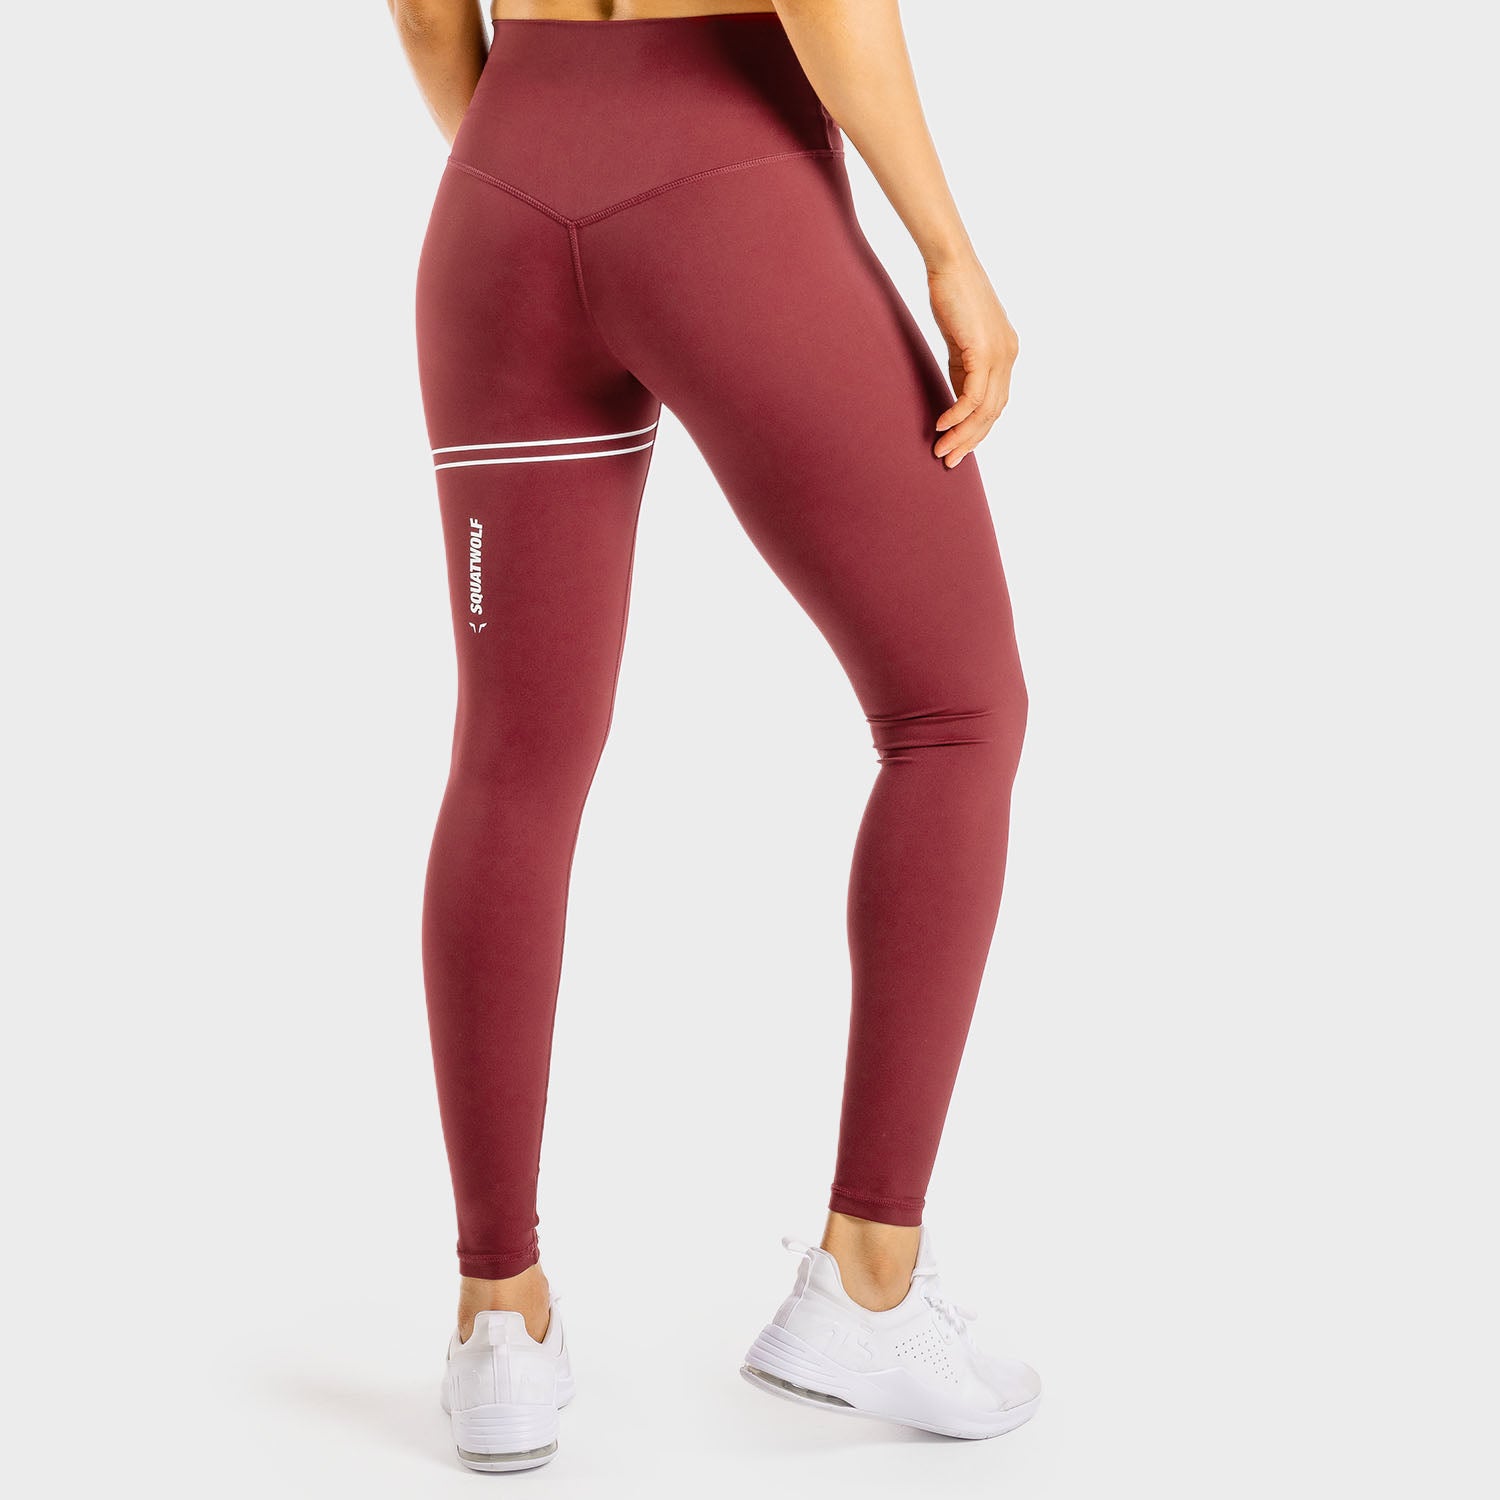 squatwolf-workout-clothes-flux-leggings-maroon-gym-leggings-for-women